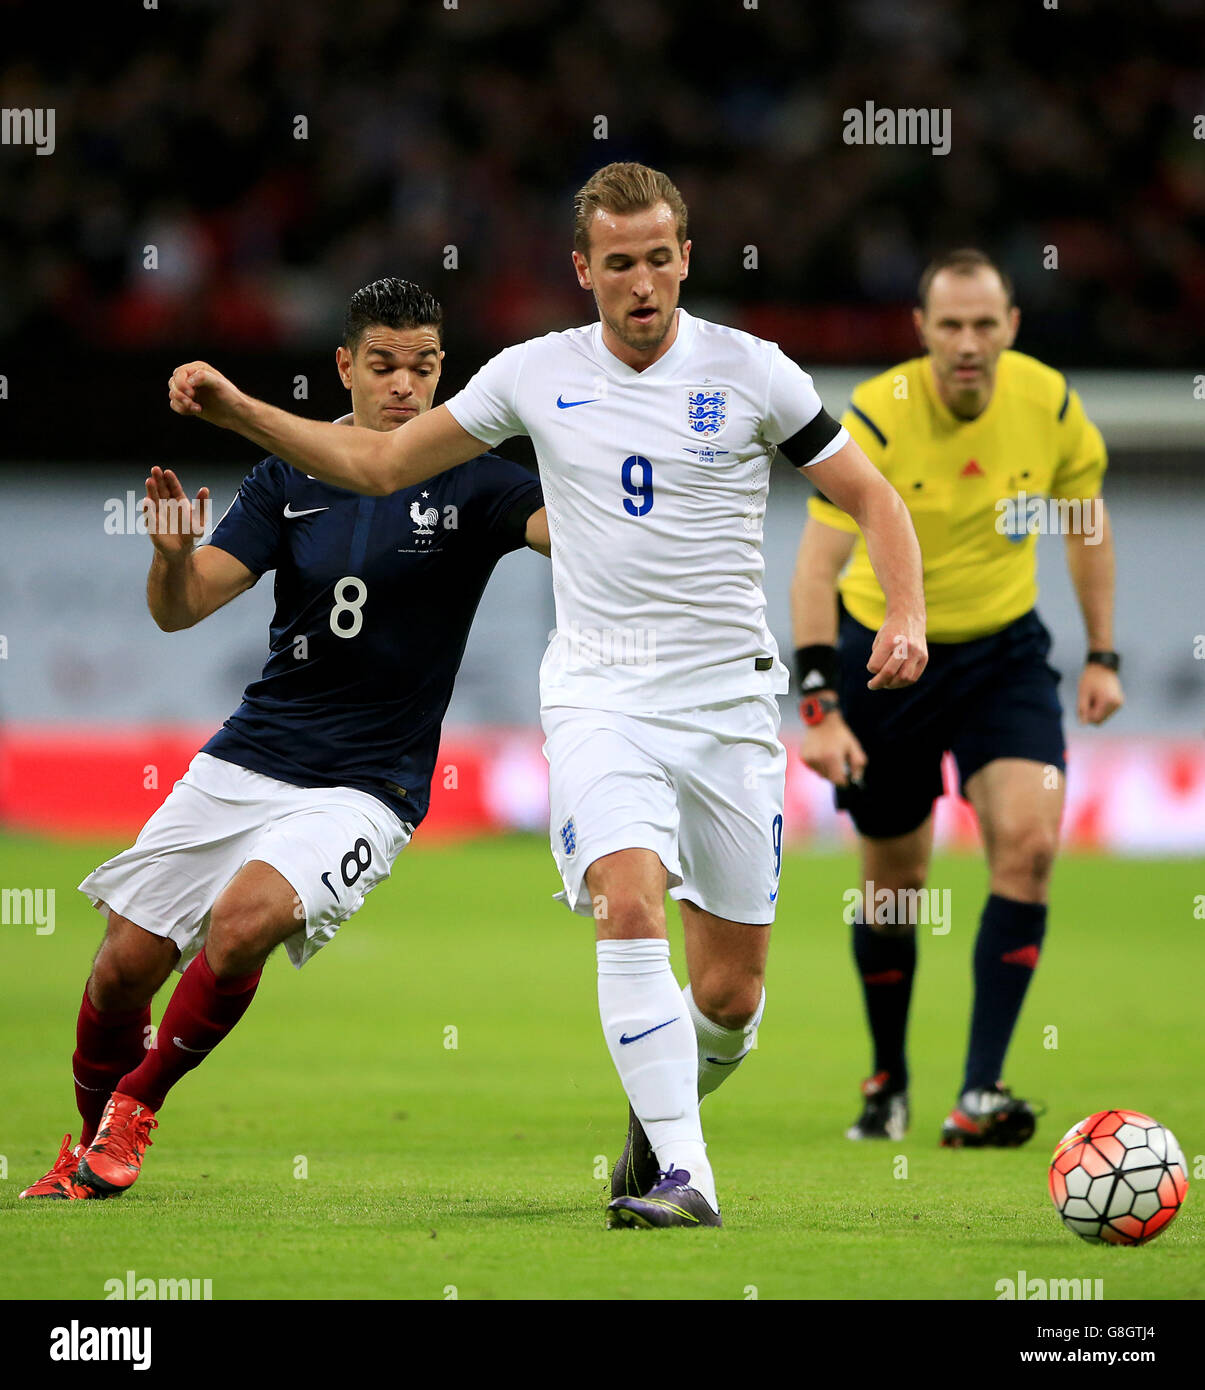 Inghilterra / Francia - International friendly - Stadio di Wembley. Harry Kane, Inghilterra. Foto Stock